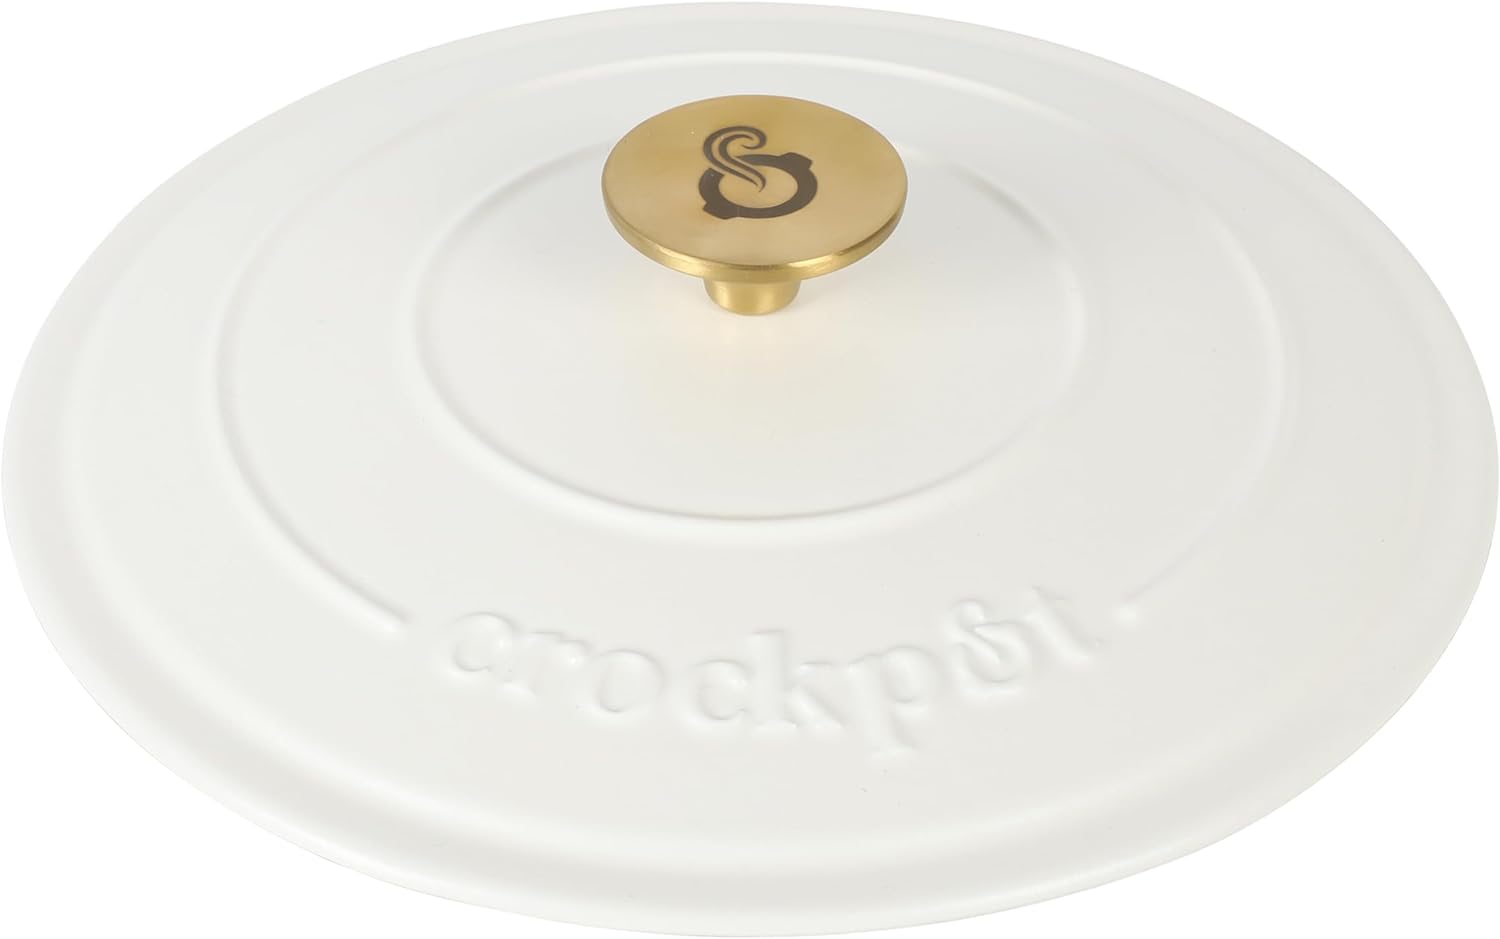 Crock Pot Artisan 6-Quart Round Dutch Oven - Matte Linen White w/Gold Knob, Gradient Red, or Teal Ombre